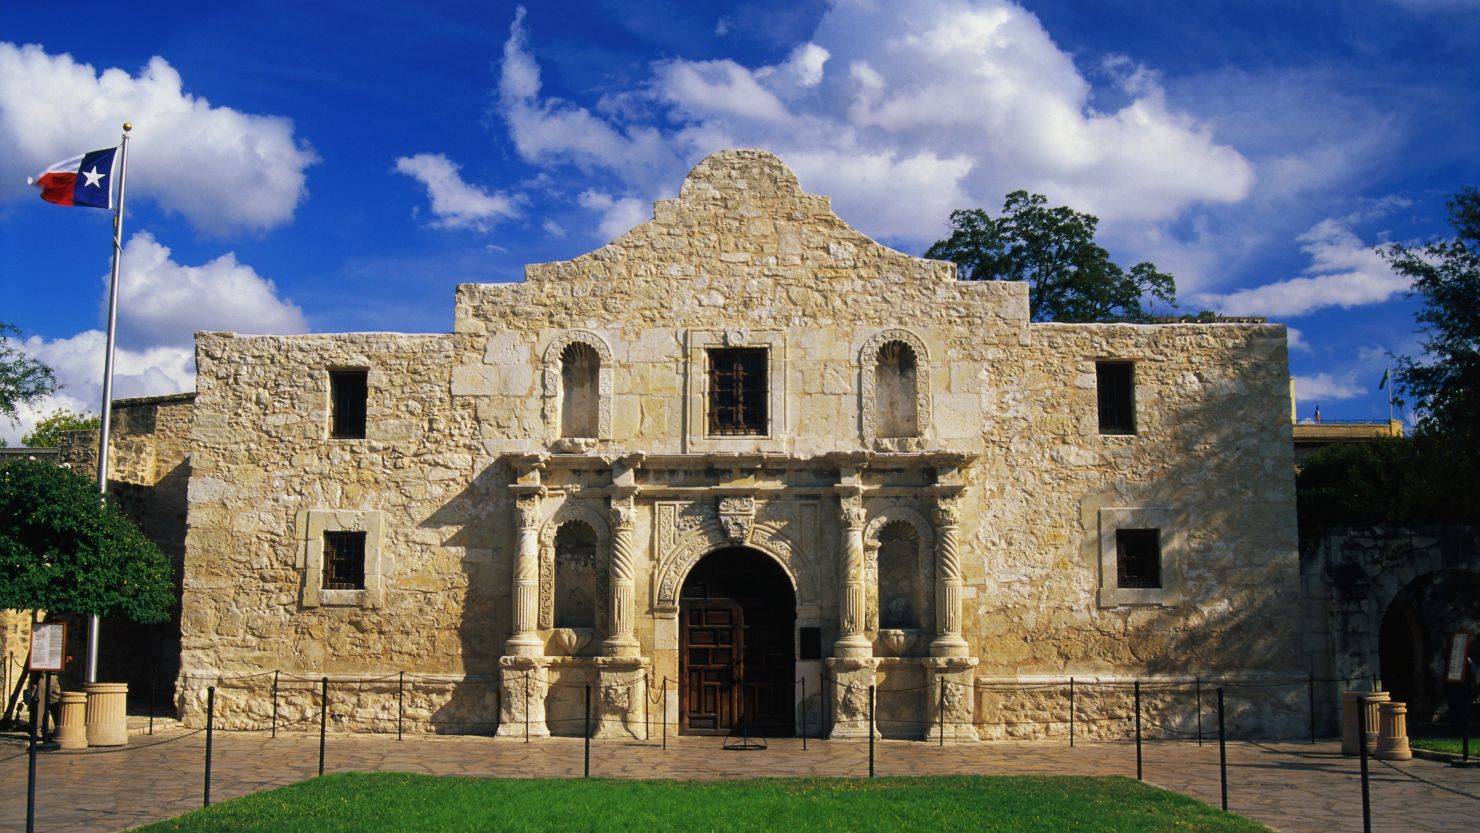 The Alamo is a popular tourist spot in San Antonio, Texas.